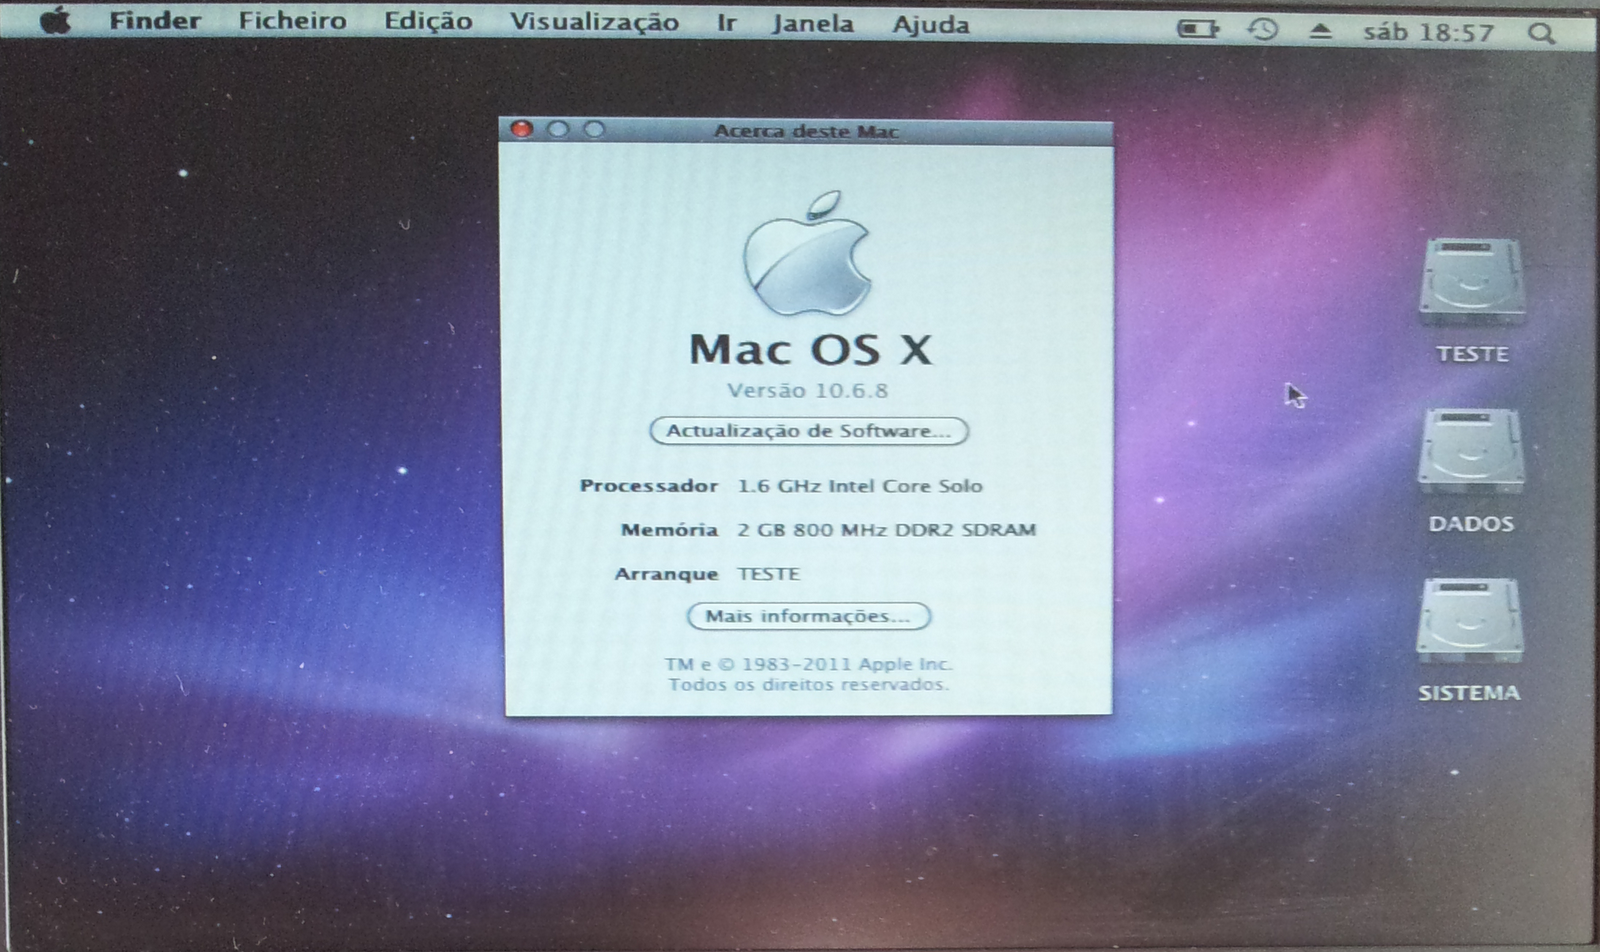 Mac Os X Snow Leopard 10.6 8 Vmware Image Download